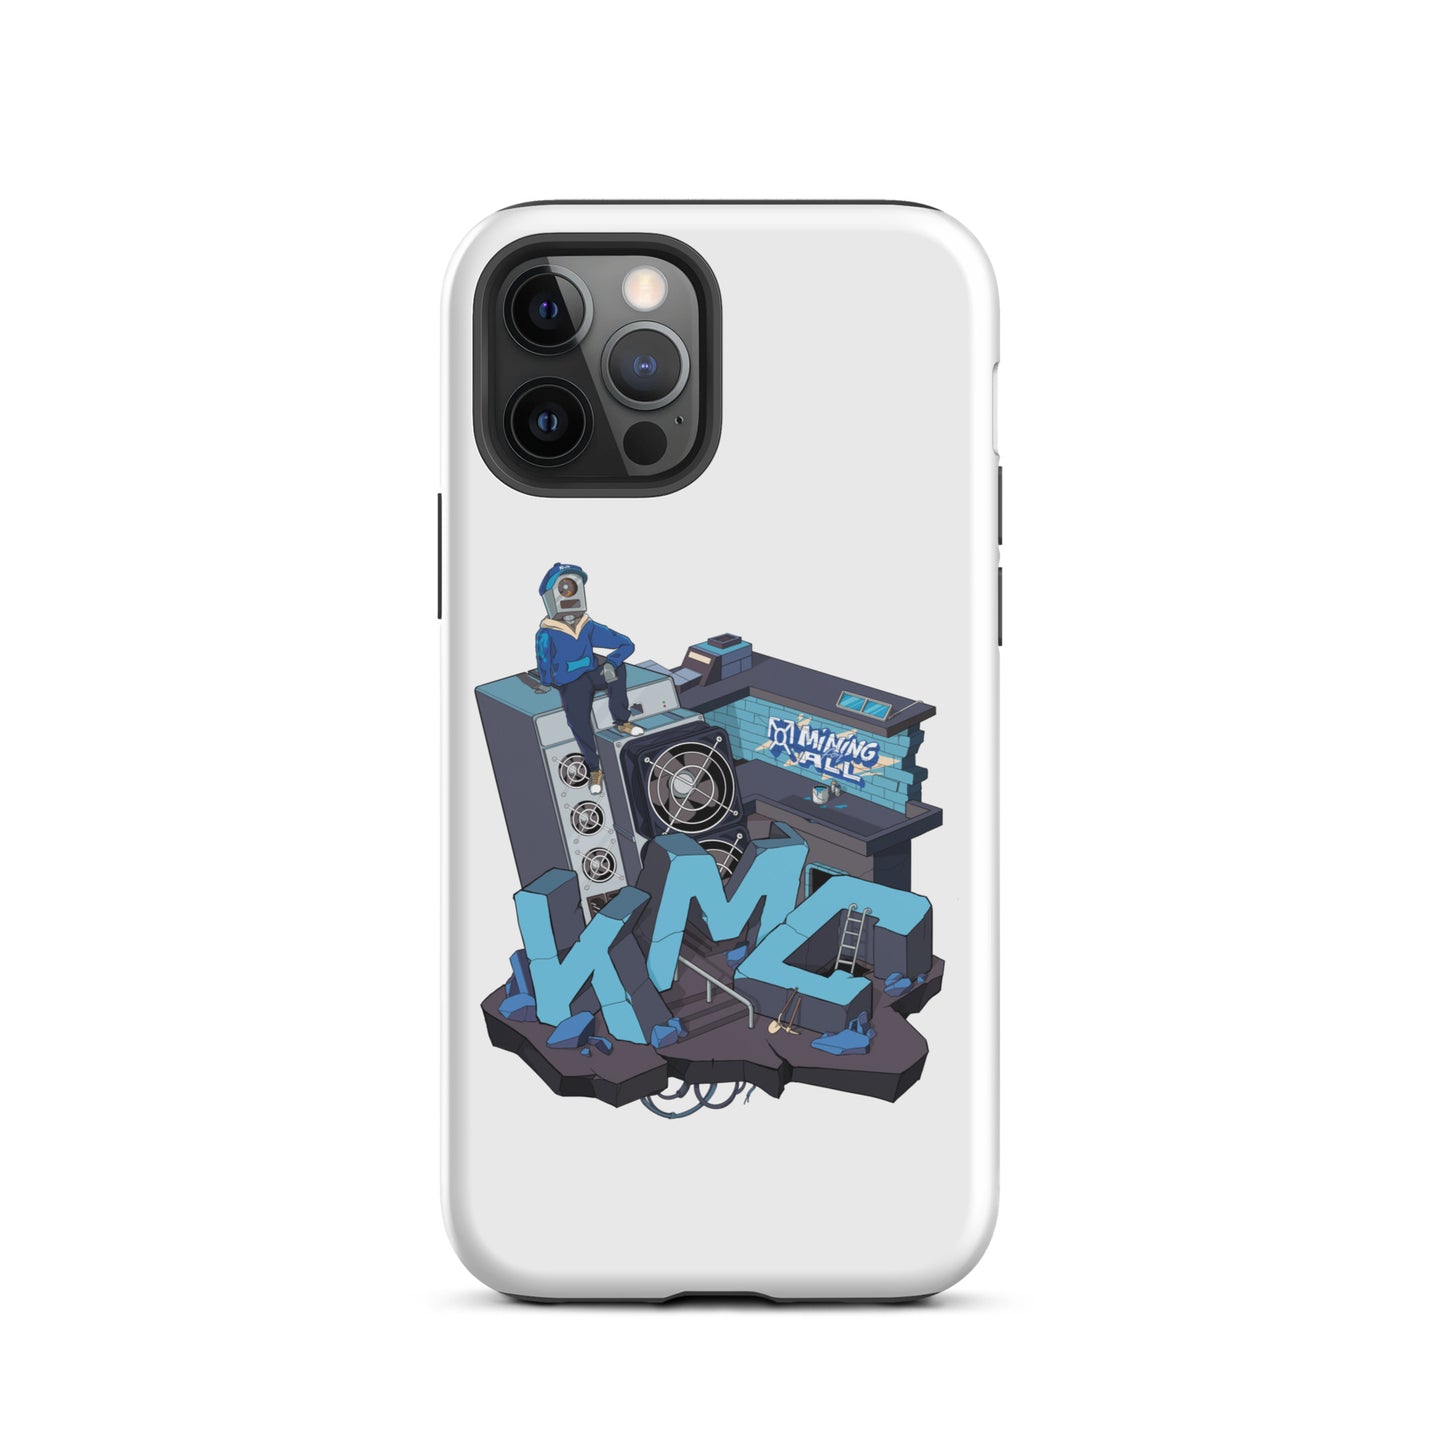 KMC iPhone Case